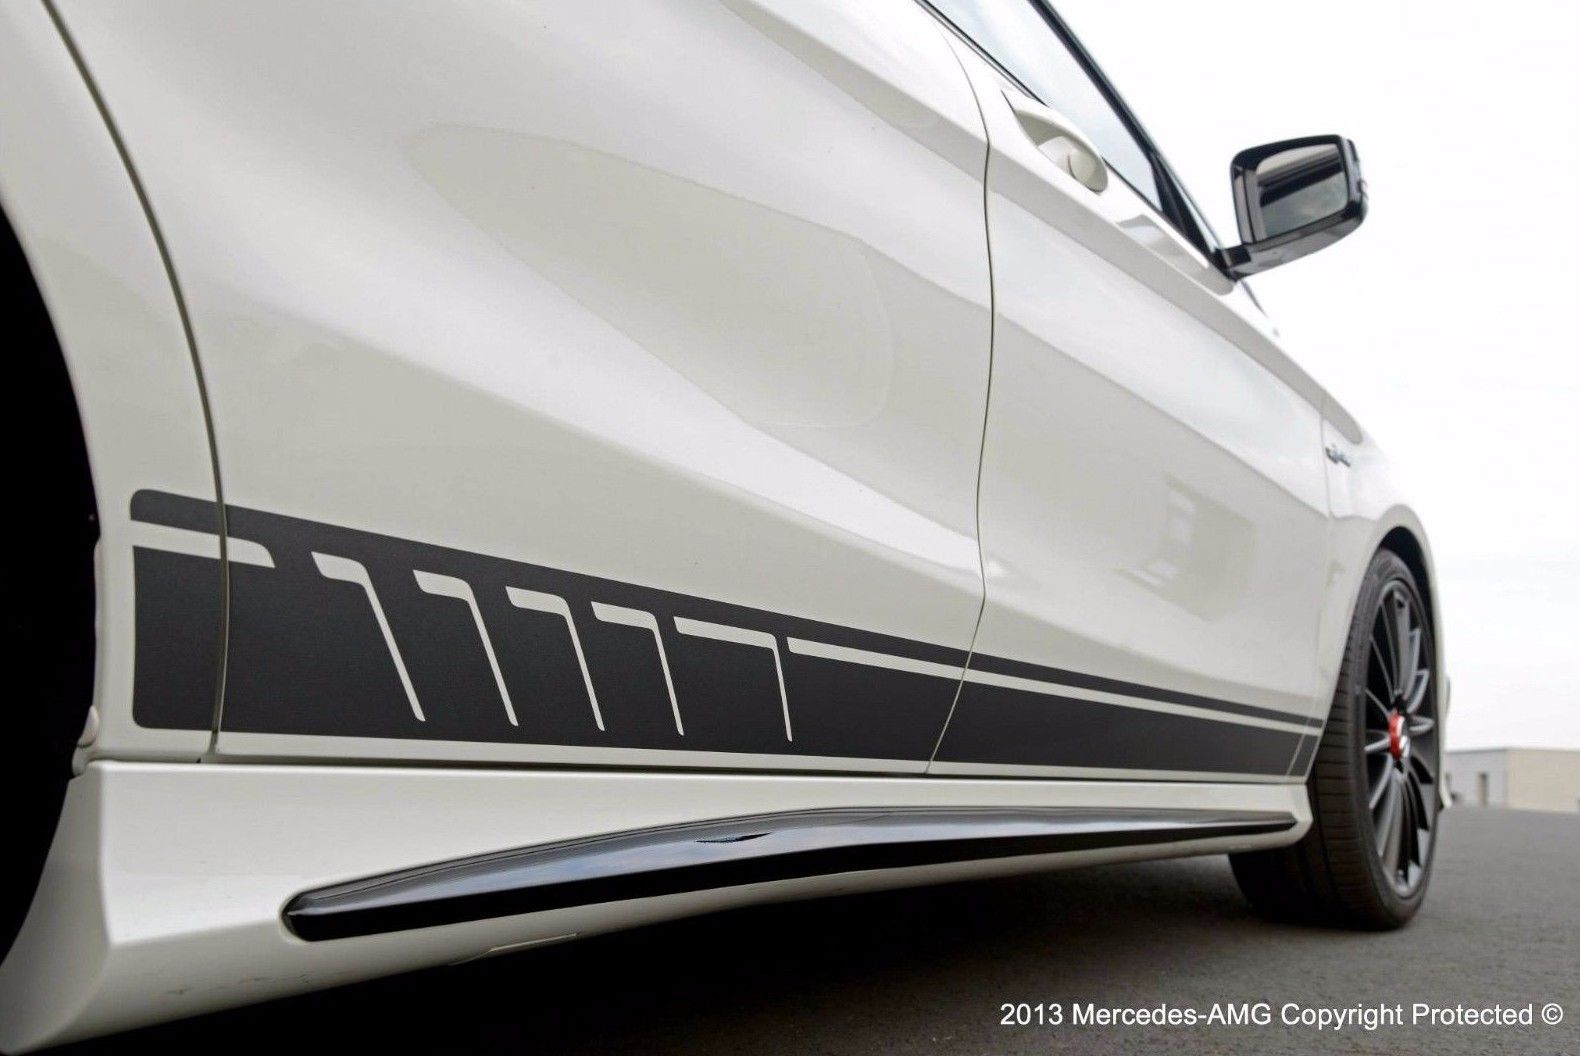 Style Stripes Vinyl Decal Sticker for Mercedes Benz CLA AMG Black
